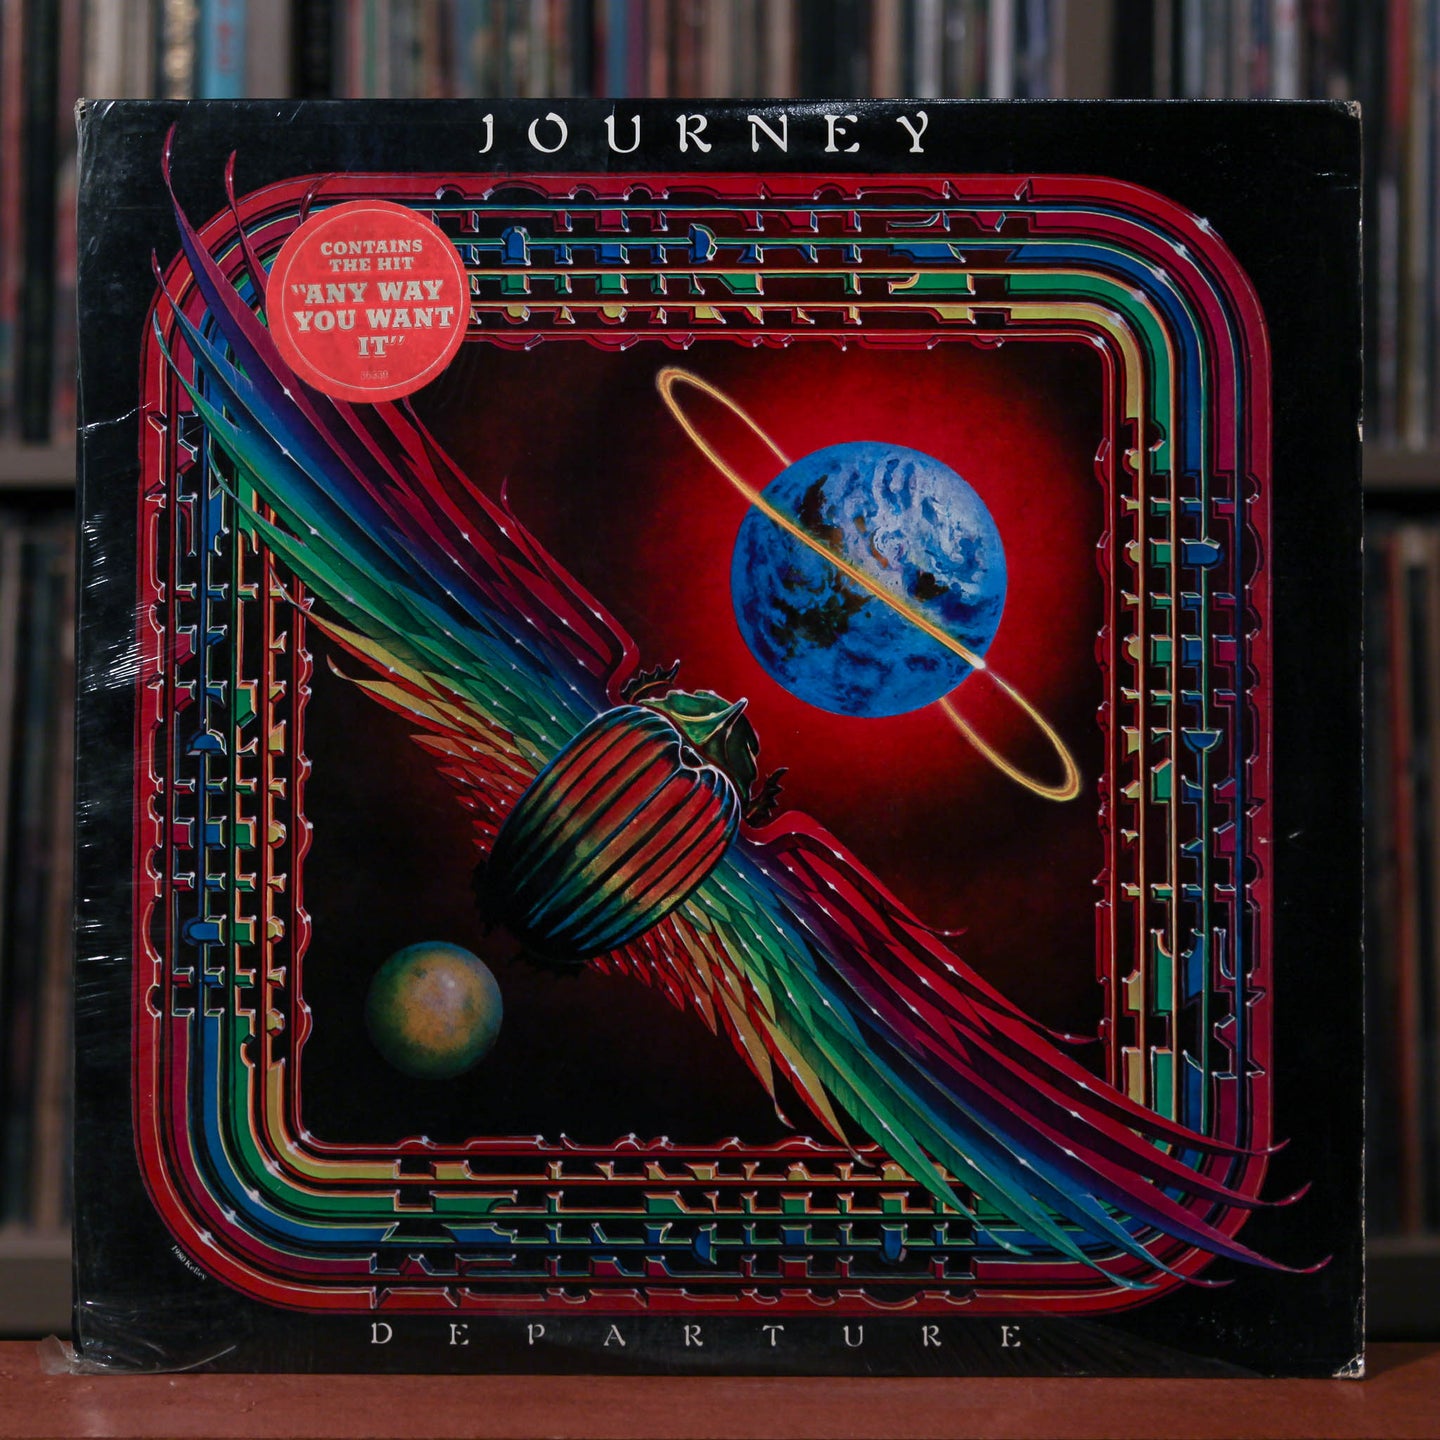 Journey - Departure - 1980 Columbia, VG+/VG